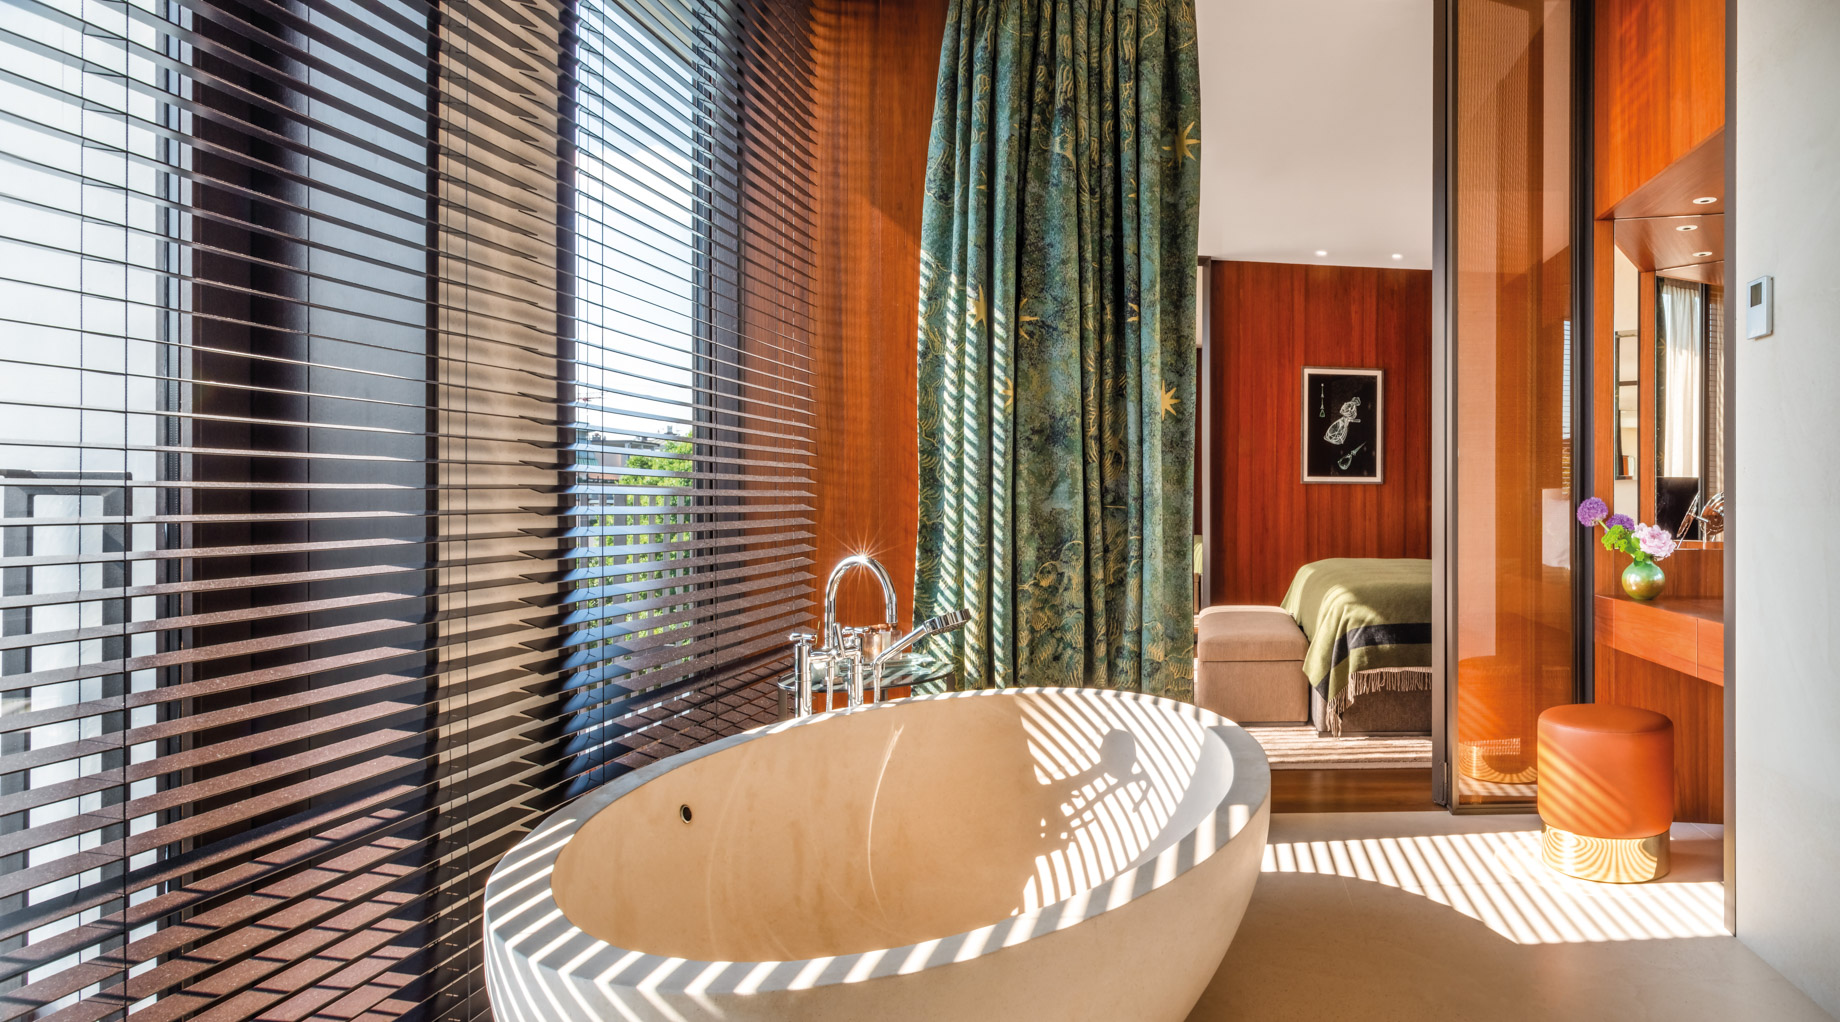 Bvlgari Hotel Milano – Milan, Italy – Bvlgari Suite Bathroom